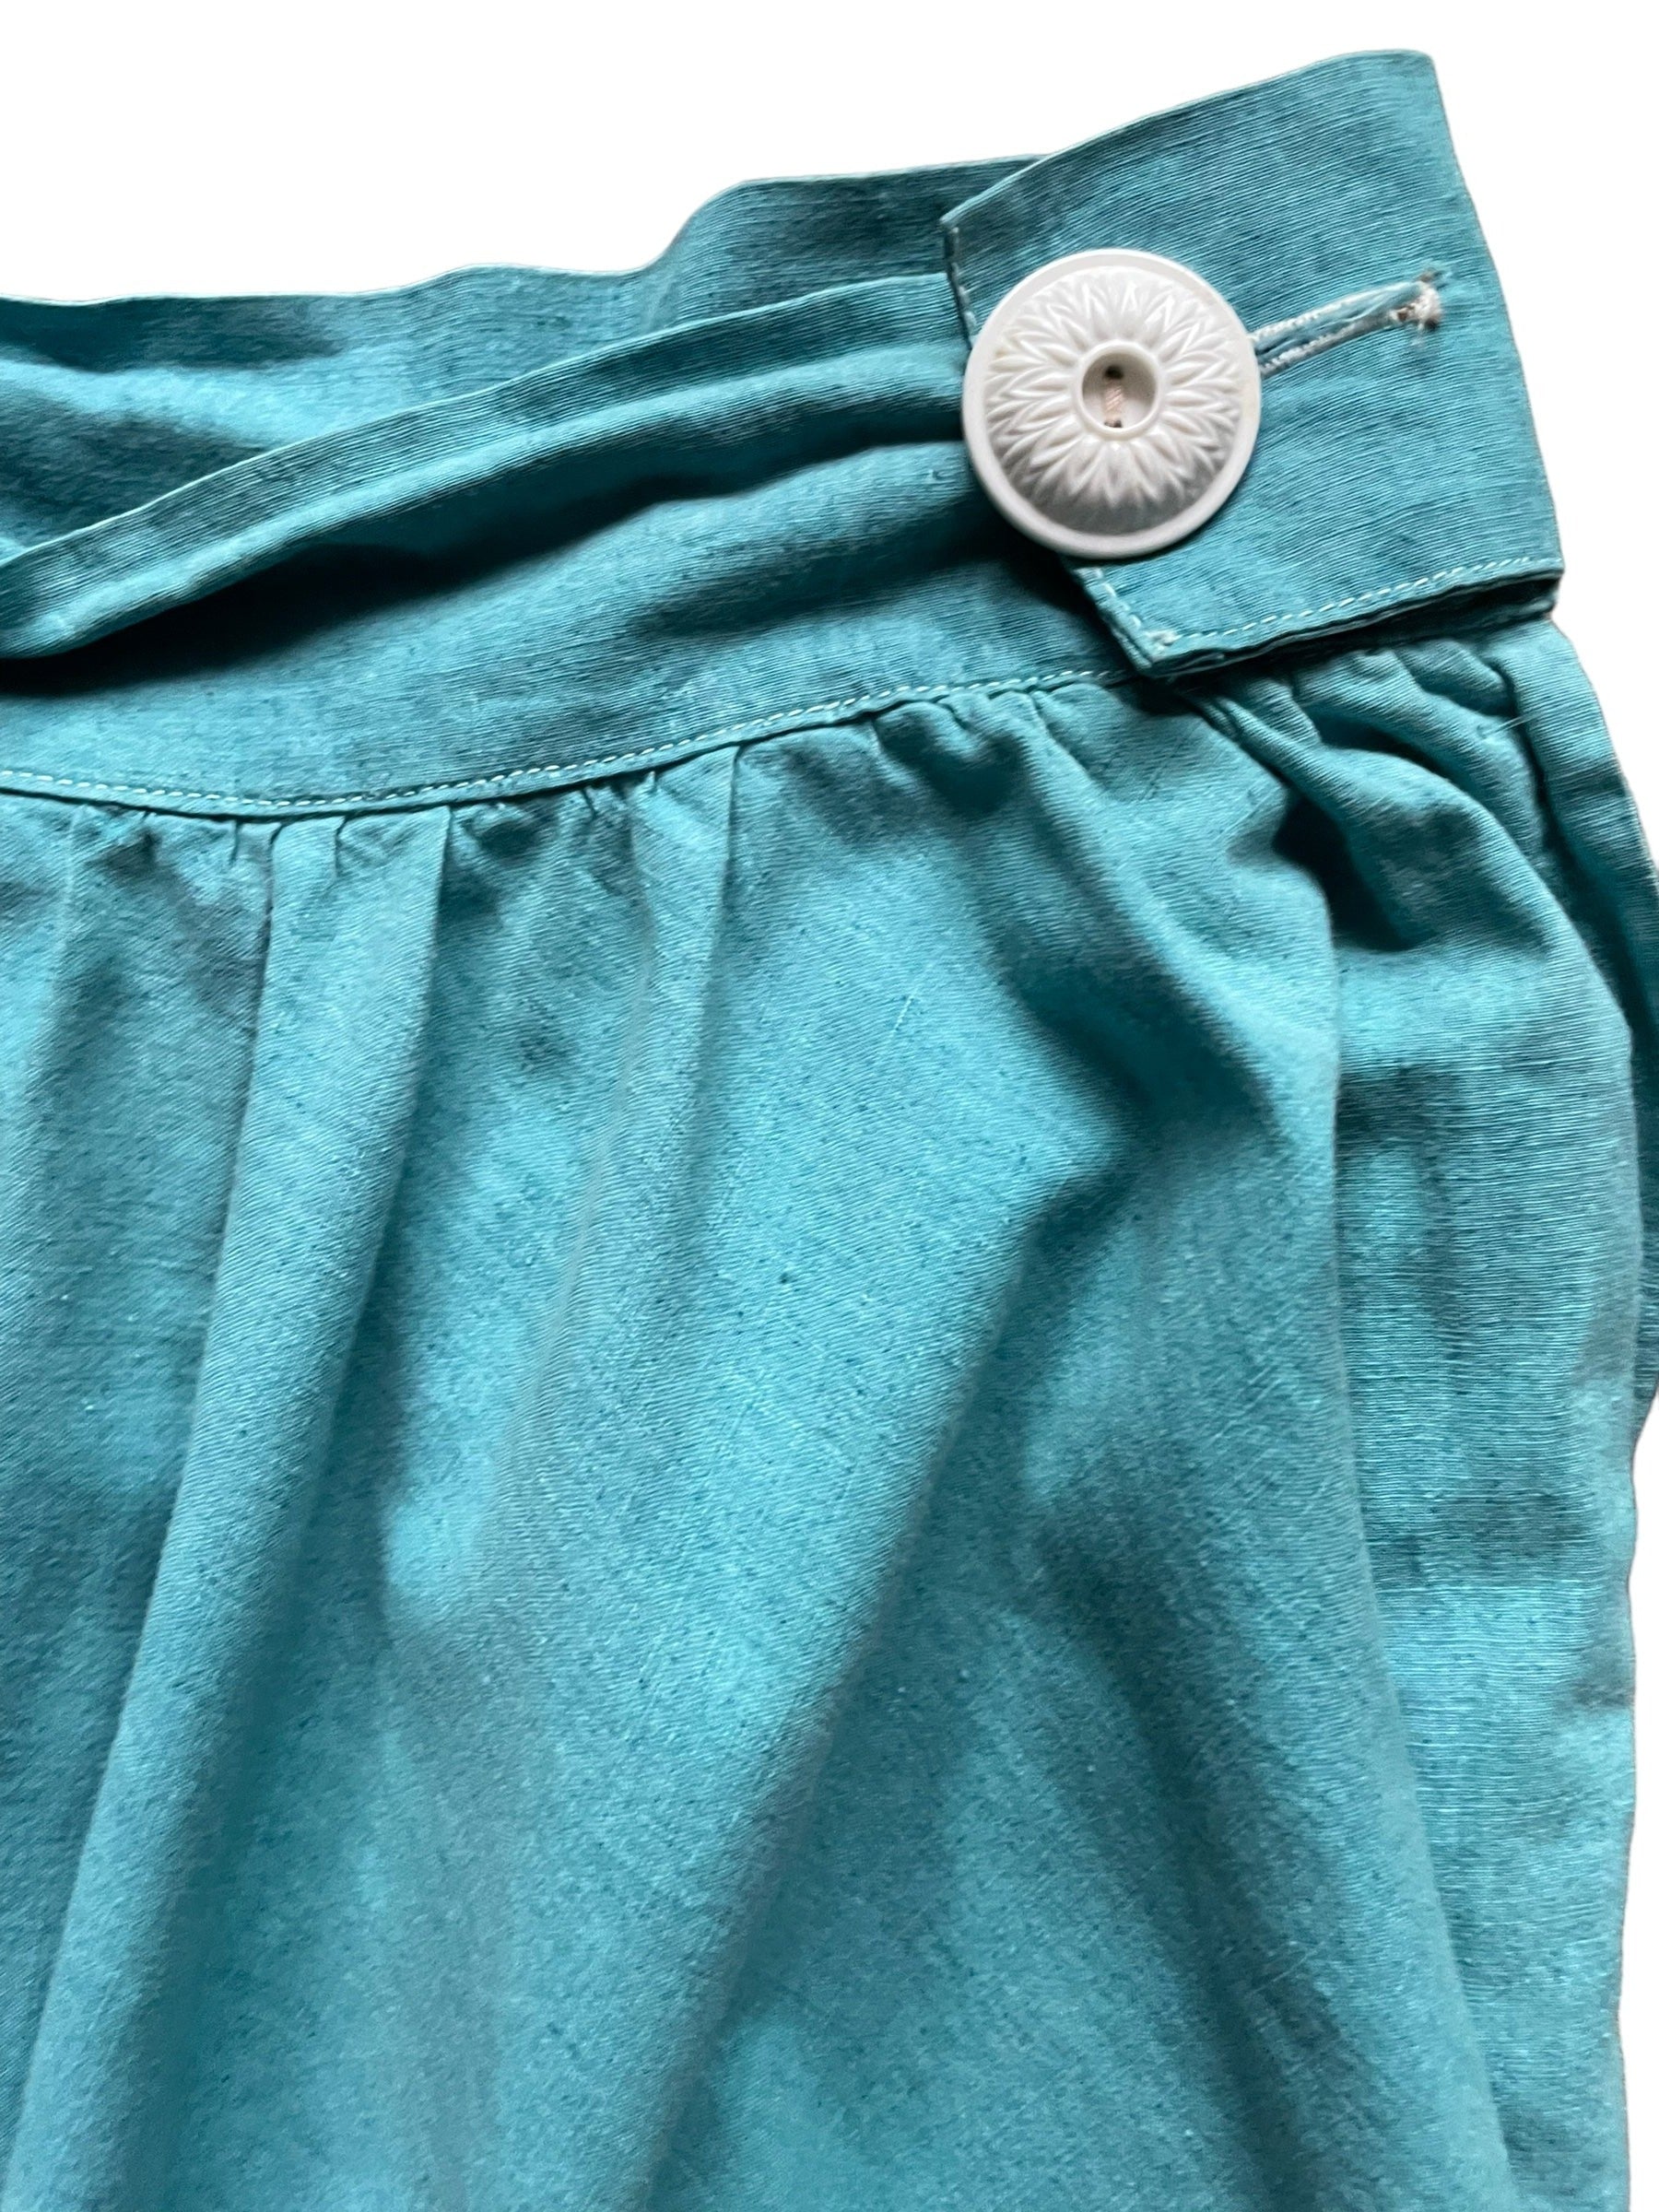 Button detail of Vintage 1950s Ricrac Circle Skirt SZ XS | Vintage Ladies Clothing | Barn Owl Seattle